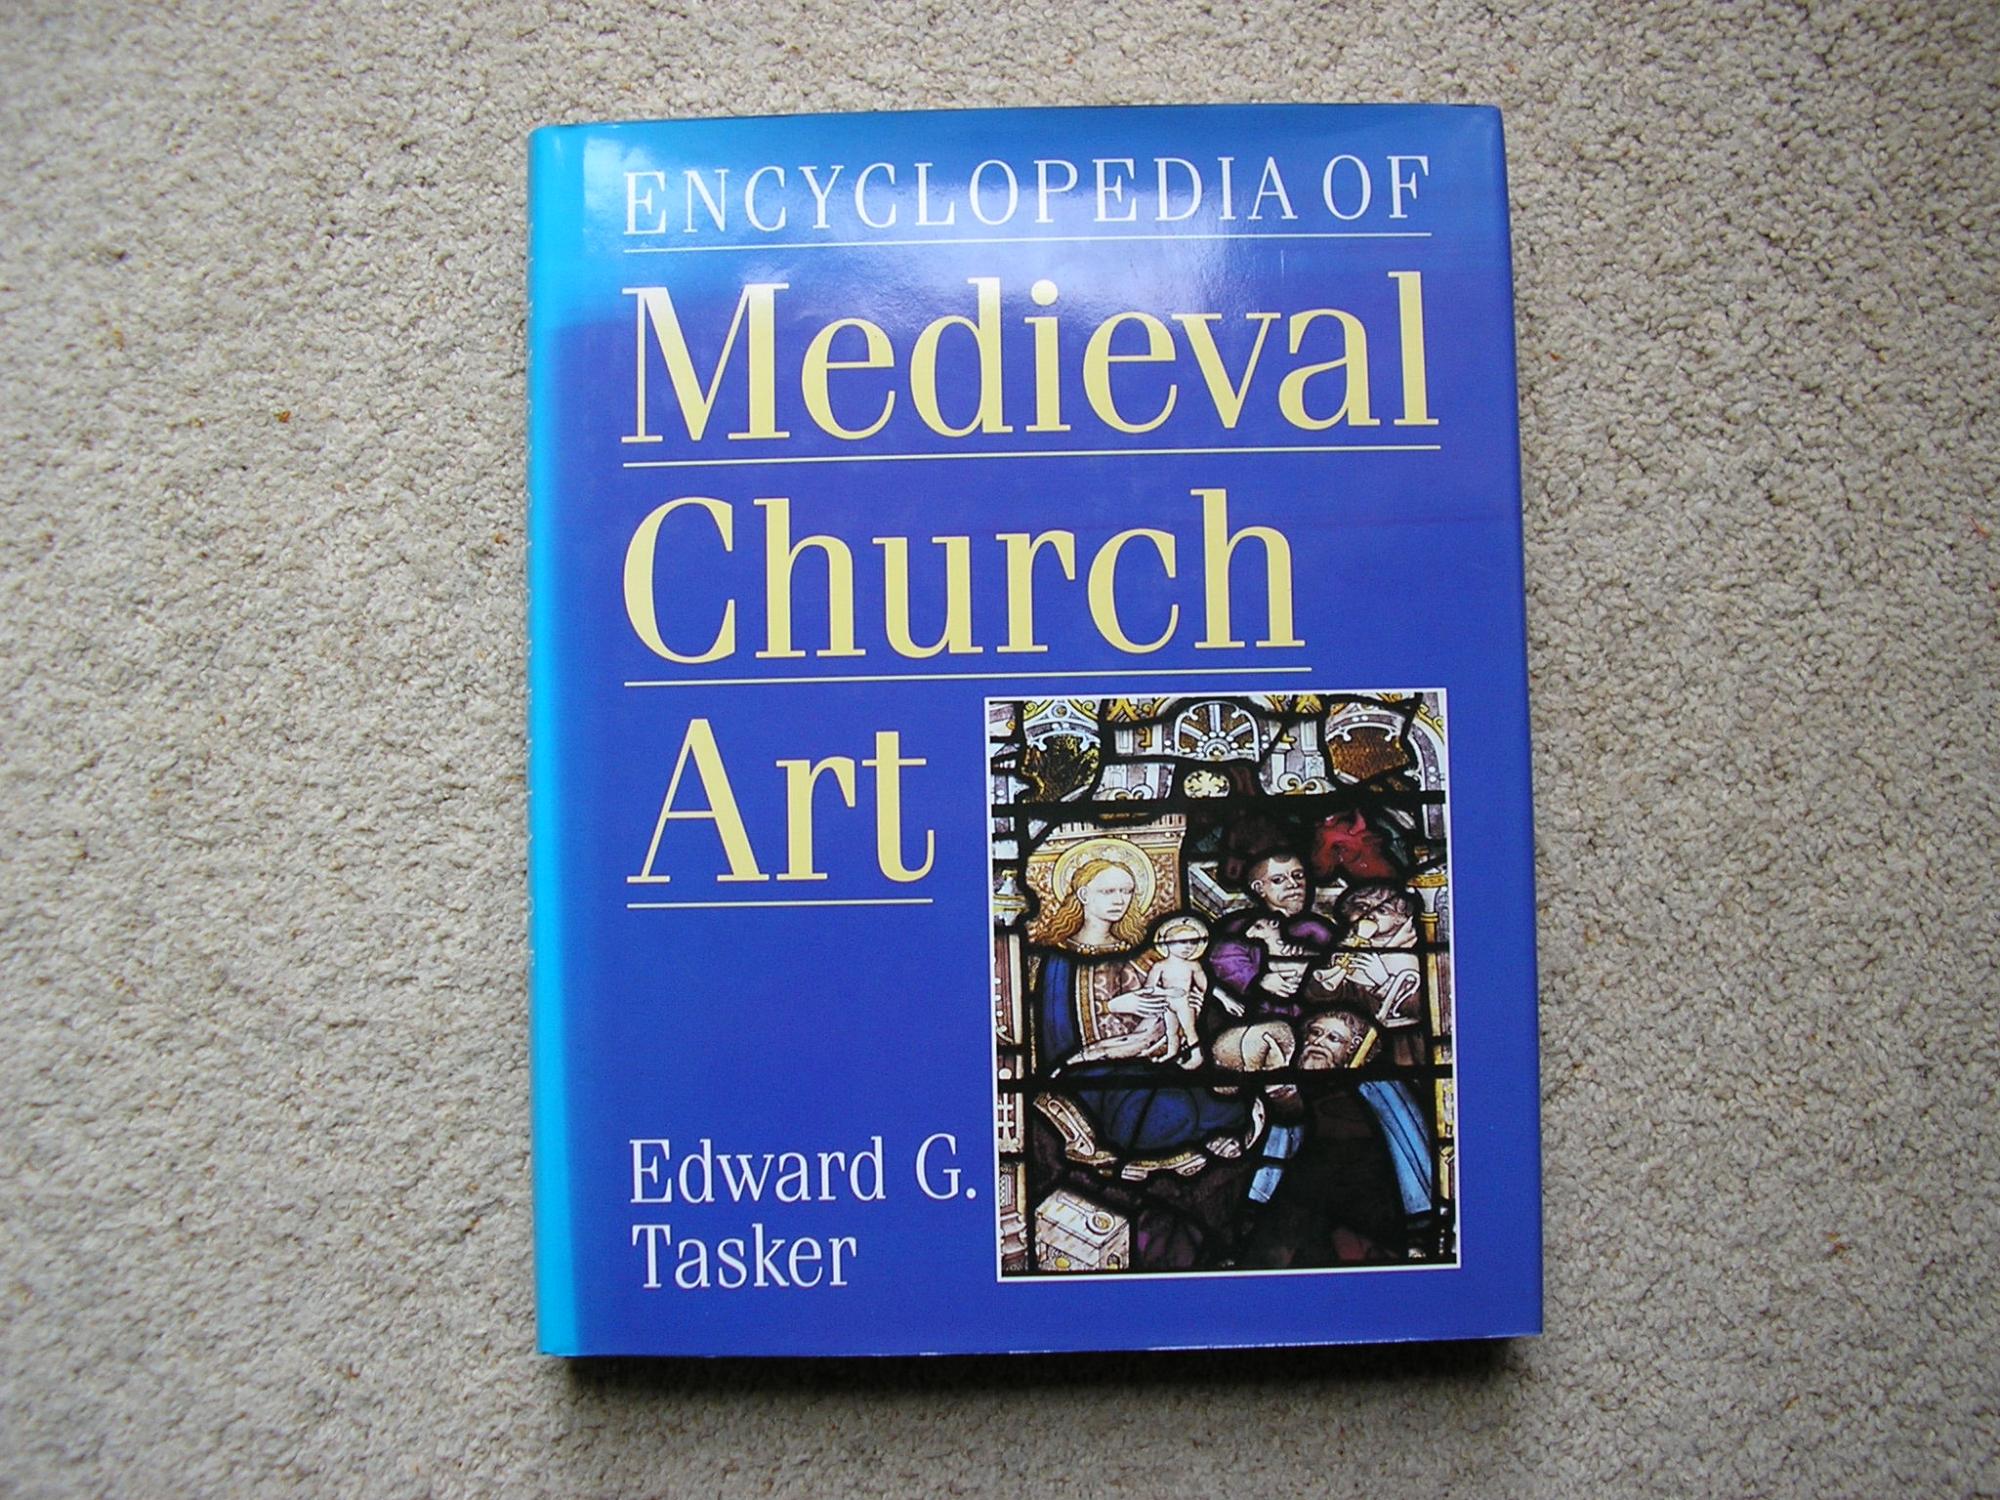 Encyclopedia of Church Art. by Edward G. Tasker. Edited by John Beaumont. | Steven Ferdinando PBFA